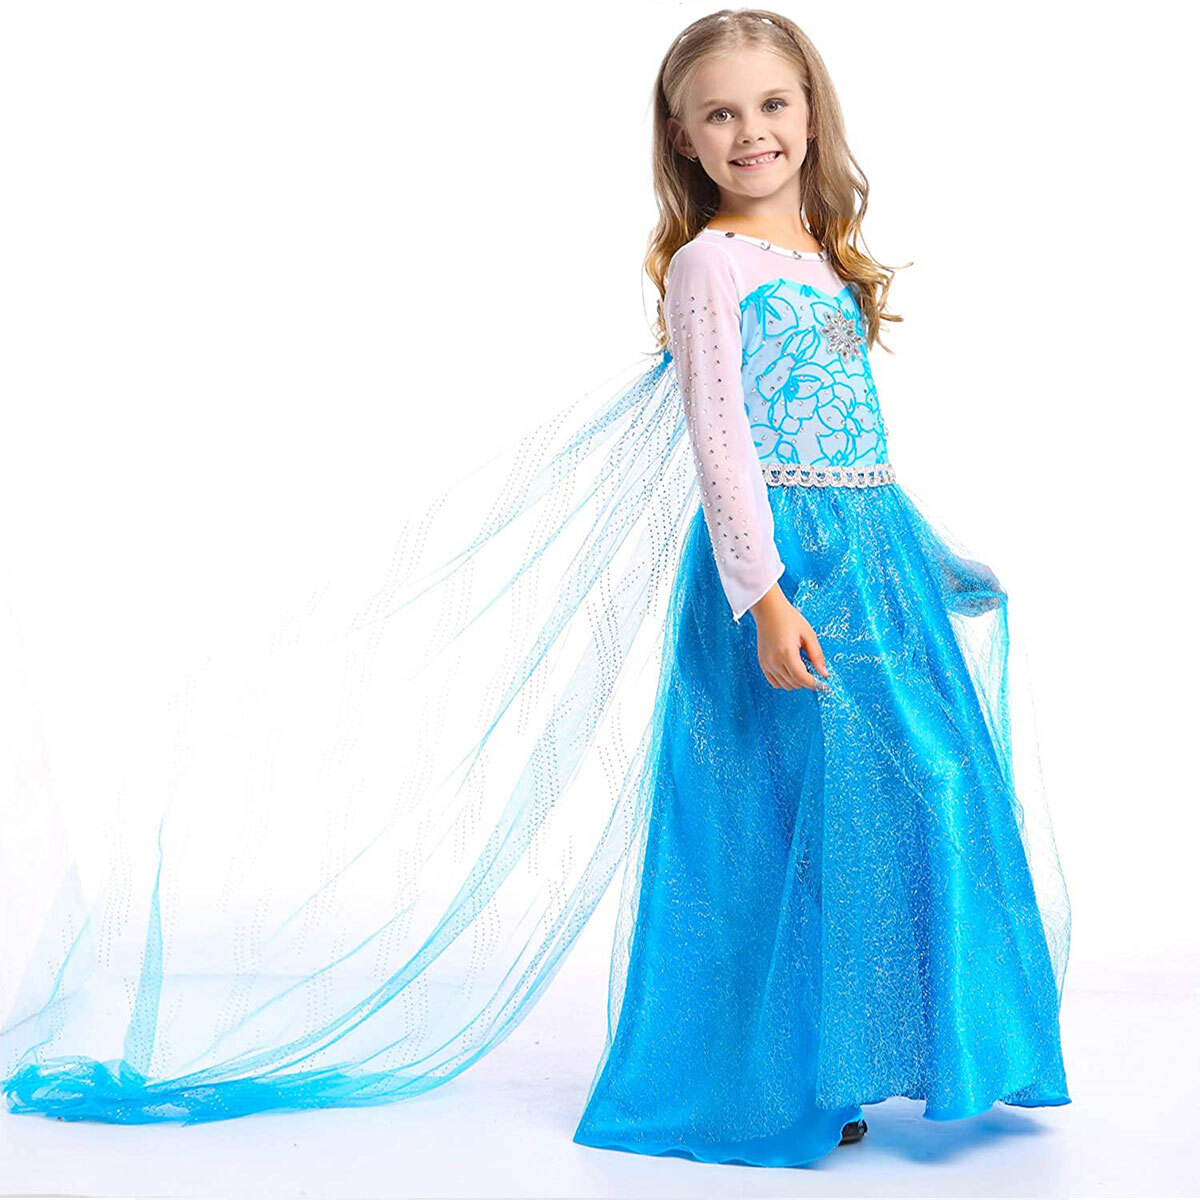 Girls Elsa Costume Princess Dress Birthday Christmas Halloween Party Dress up - image 3 of 8